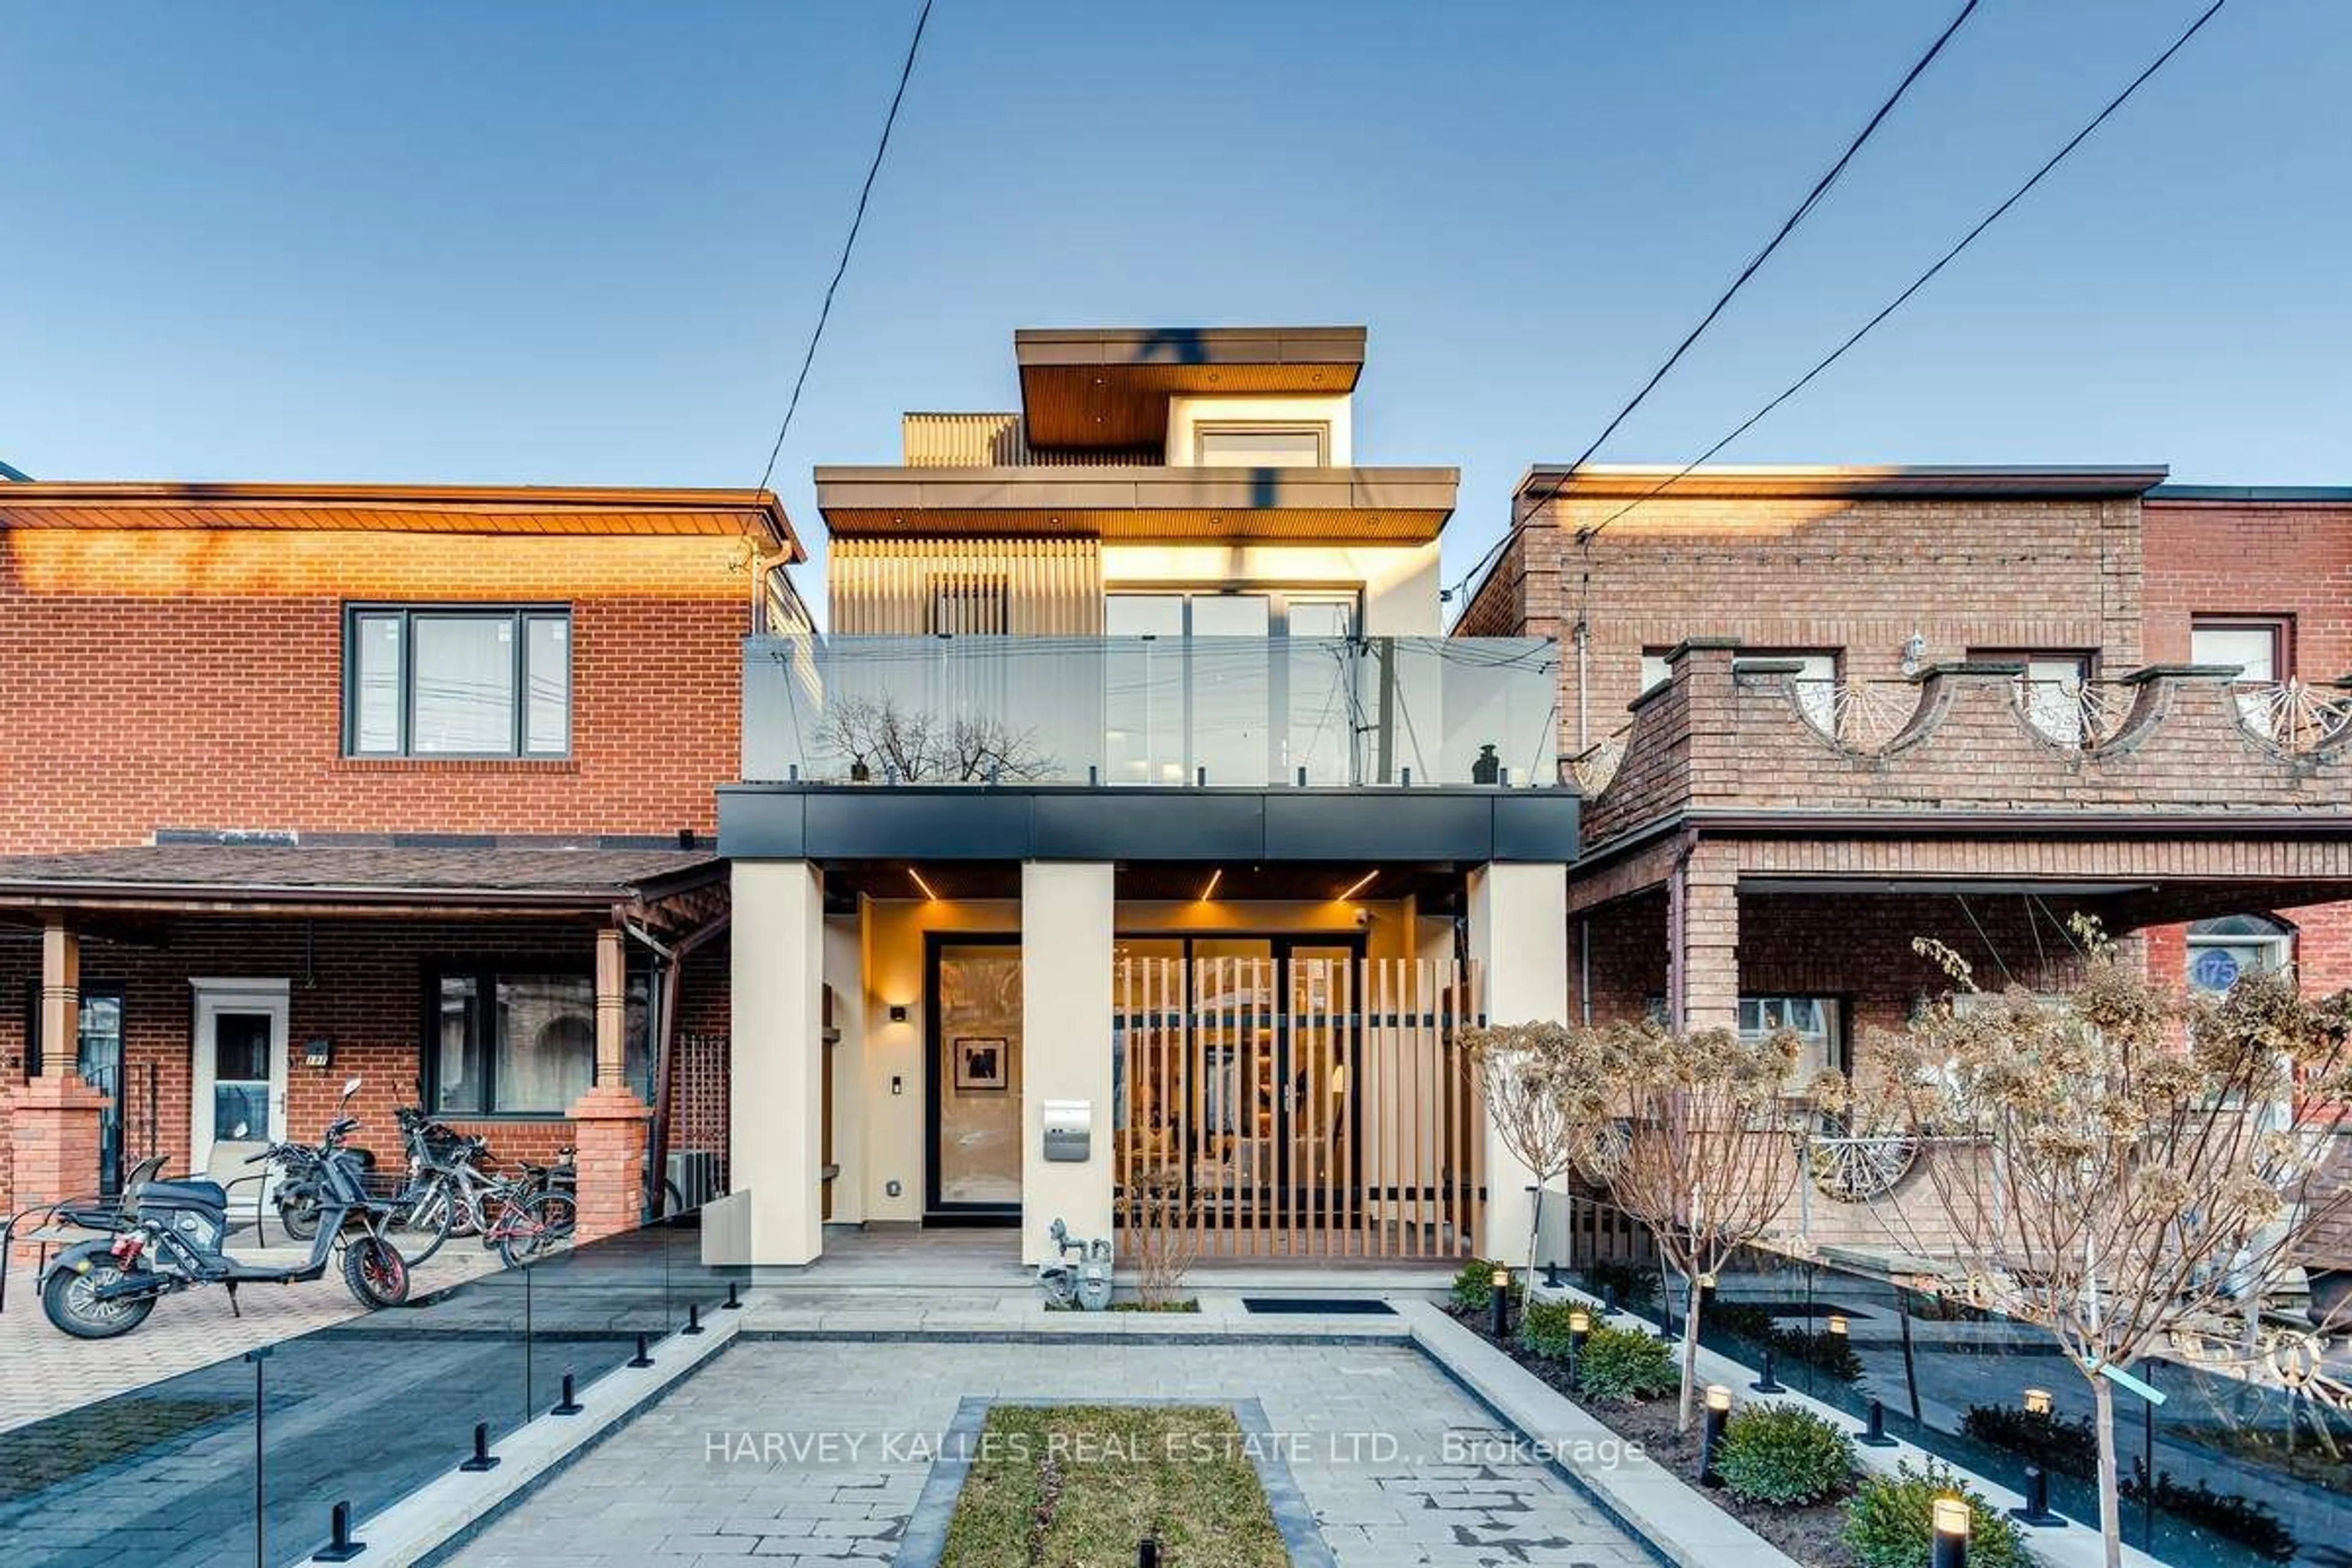 Home with brick exterior material for 179 Palmerston Ave, Toronto Ontario M6J 2J3